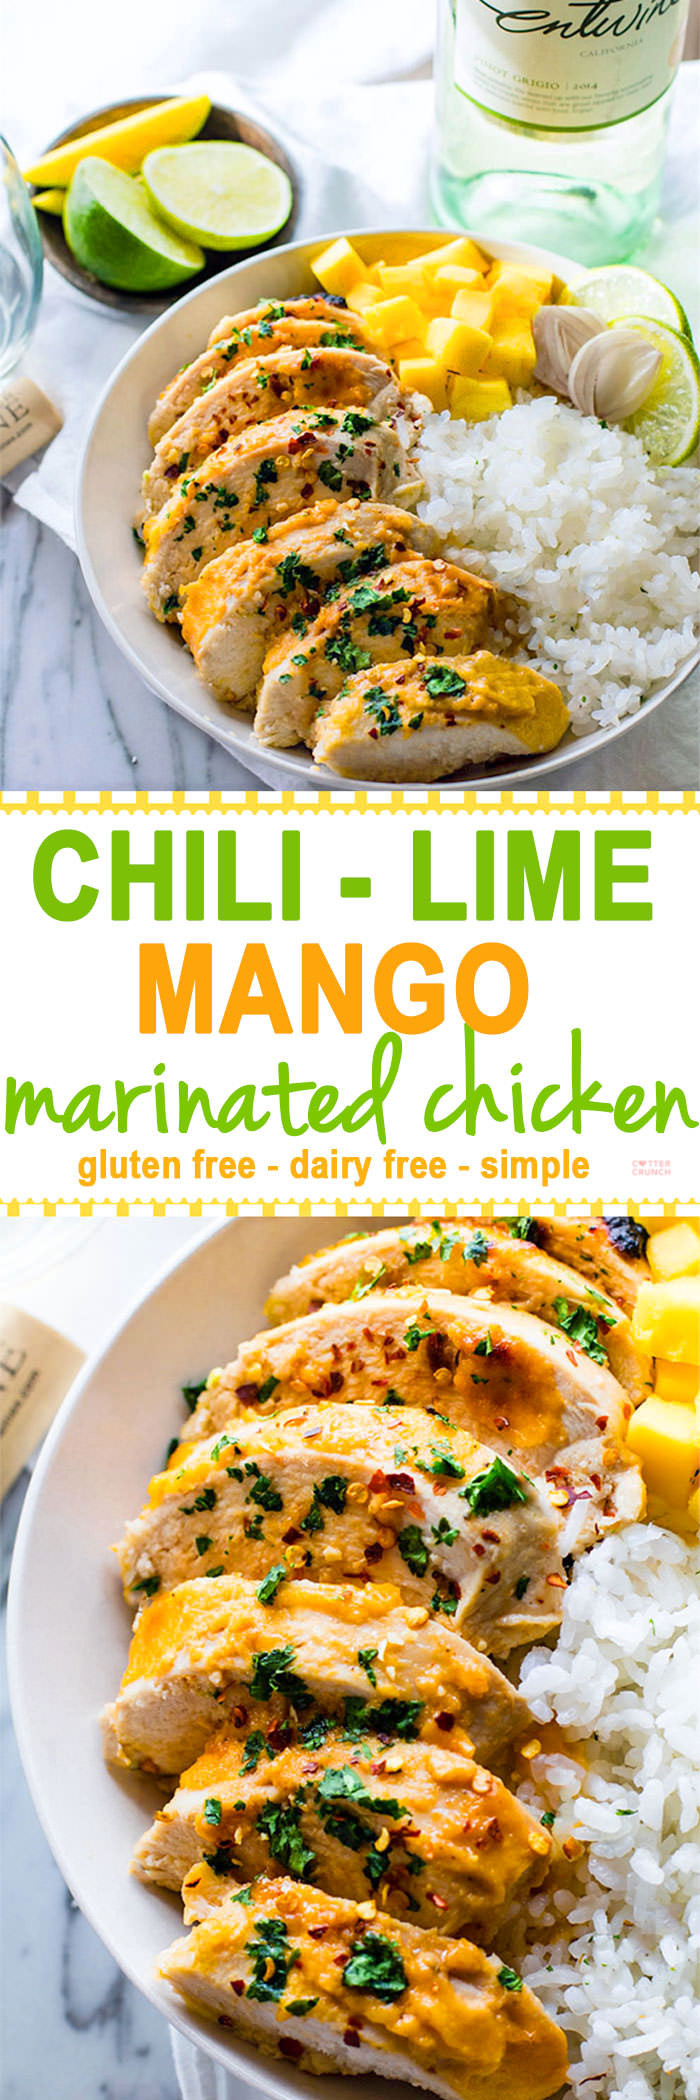 Dairy Free Chicken Recipes
 Healthy Chili Lime Mango Marinated Chicken Bowls Gluten Free